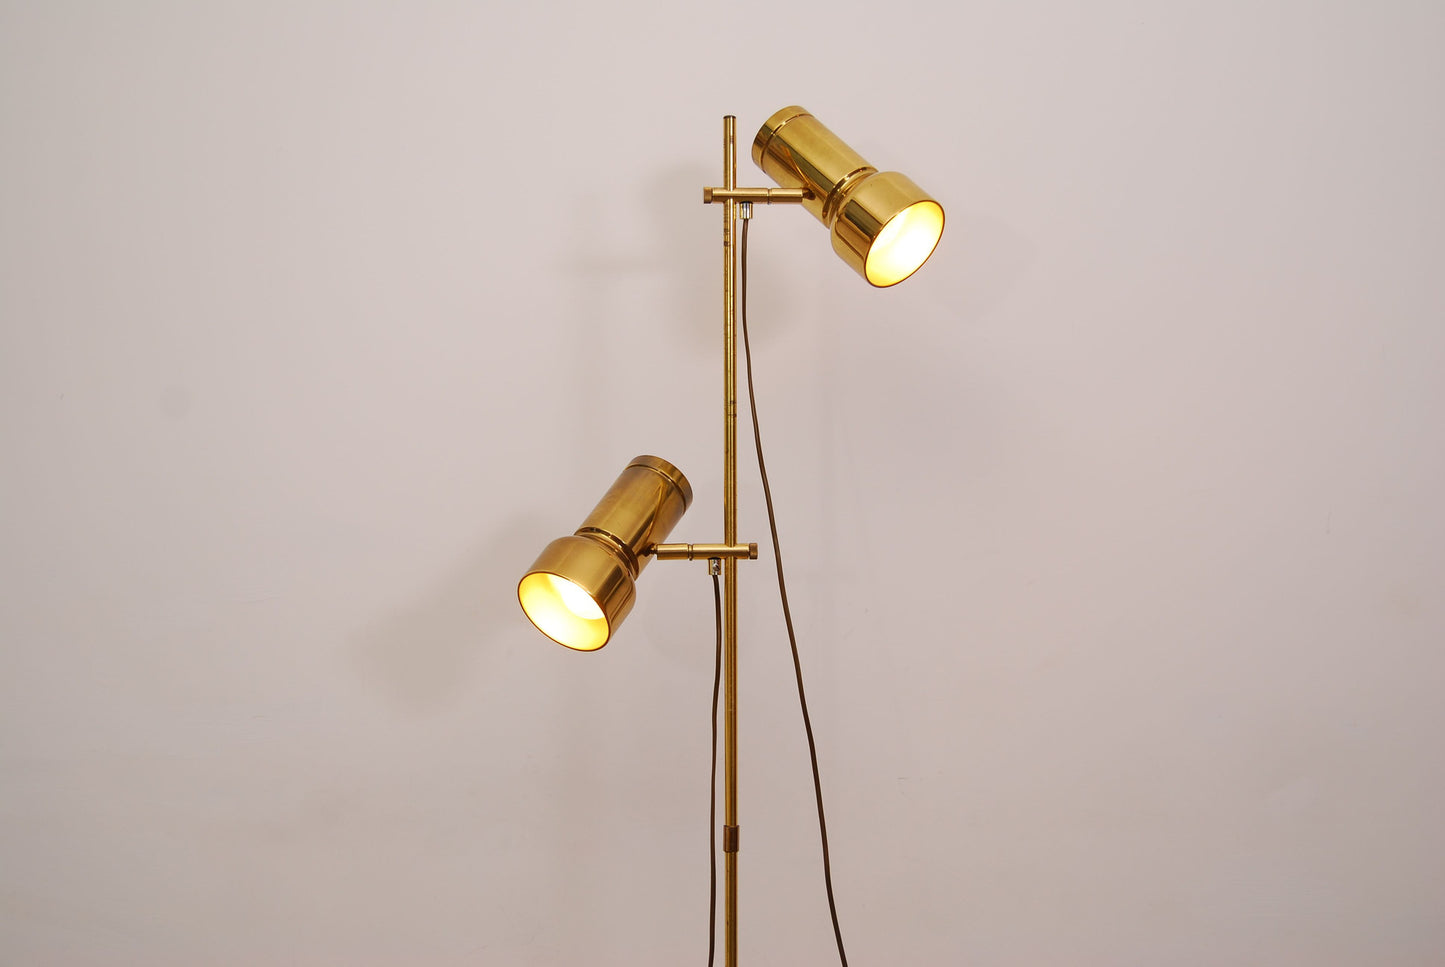 Twin-headed brass floor lamp